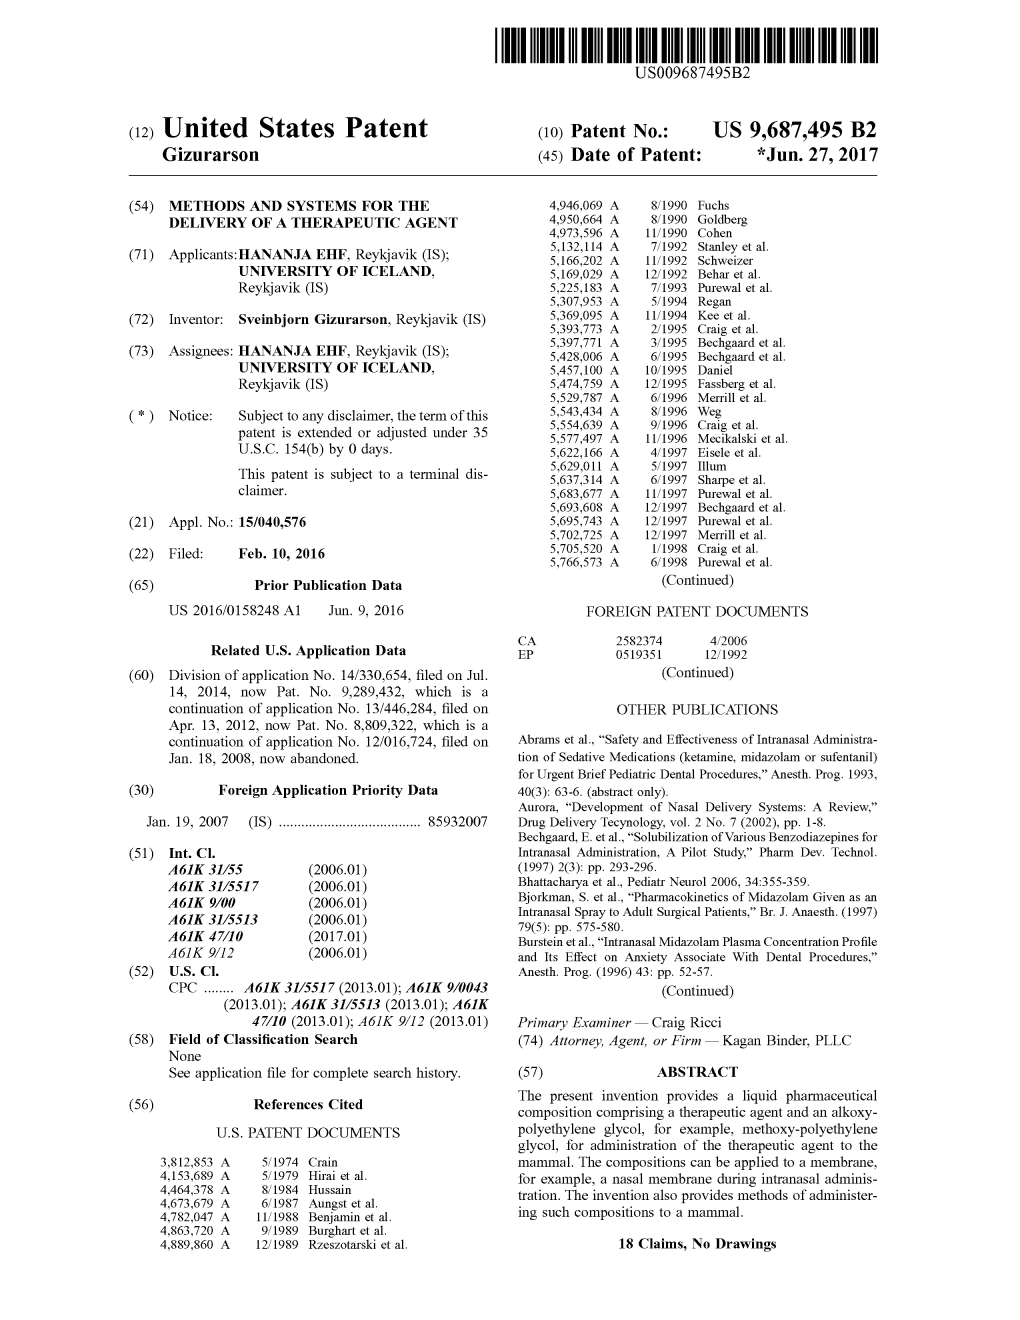 (12) United States Patent (10) Patent No.: US 9,687,495 B2 Gizurarson (45) Date of Patent: *Jun